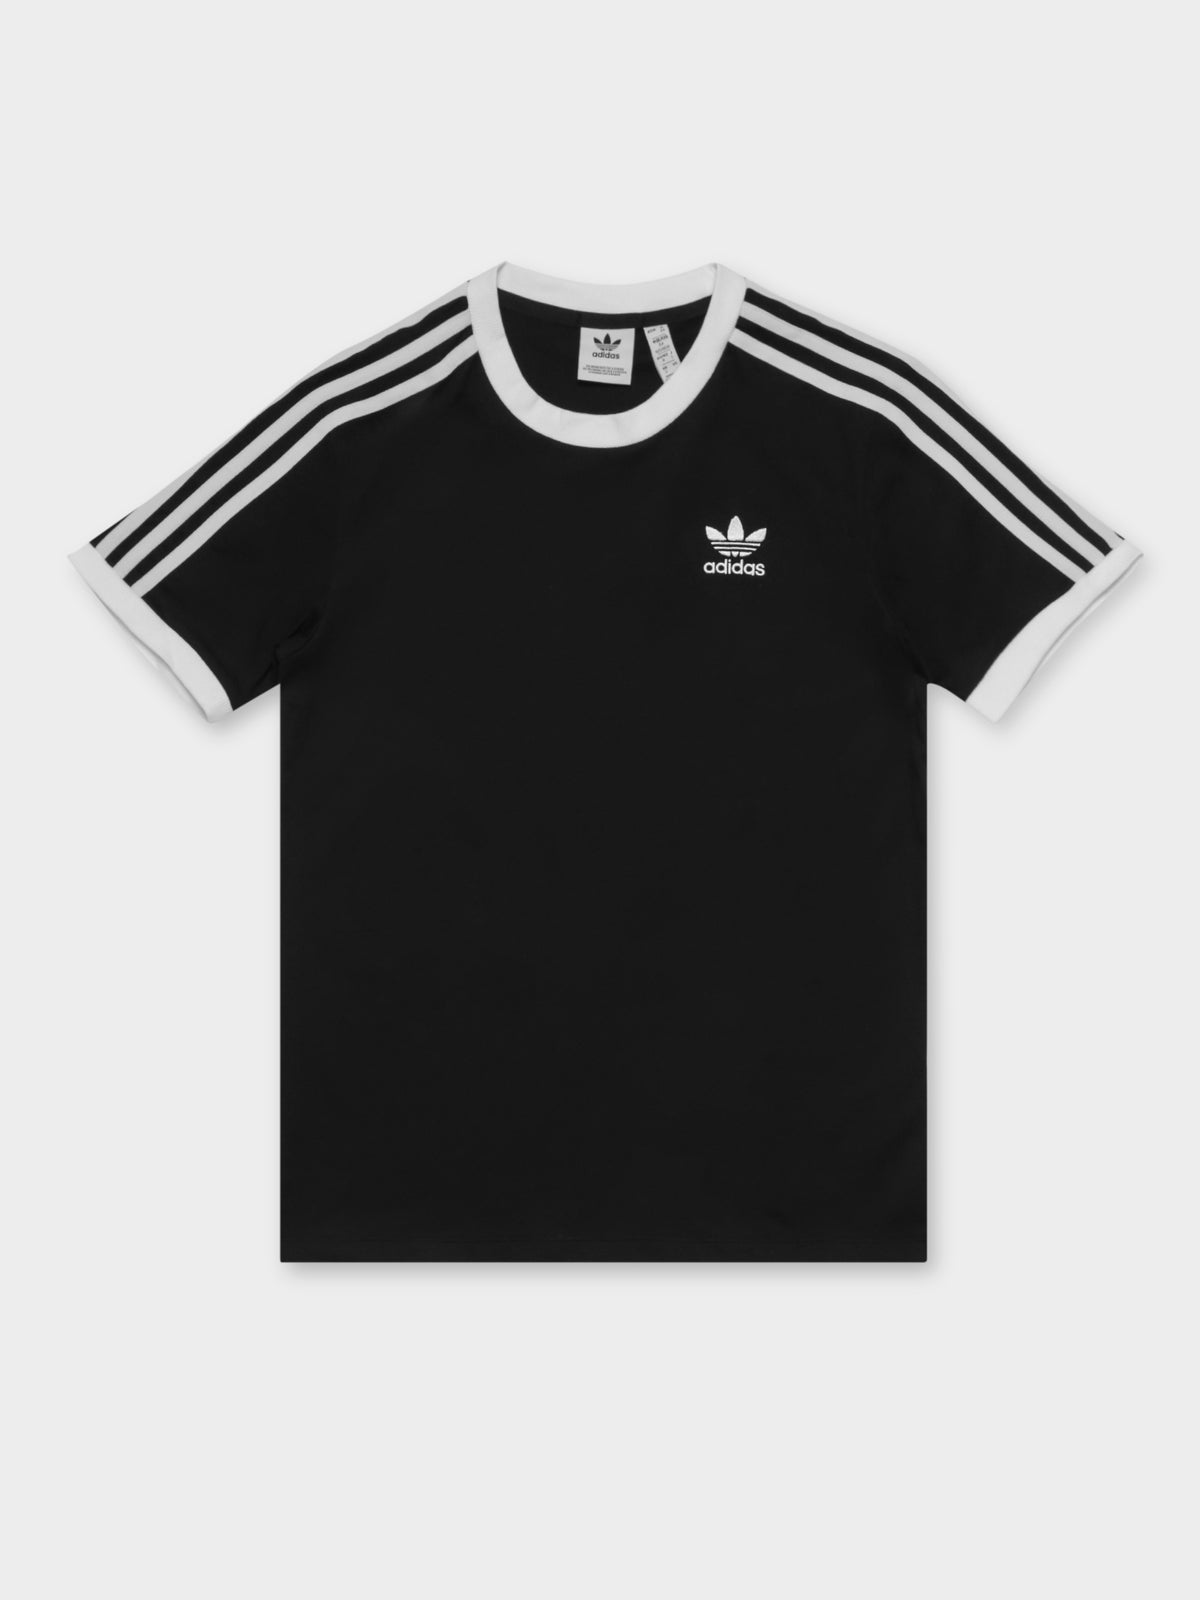 Adicolor Classics 3-Stripes T-Shirt in Black - Glue Store